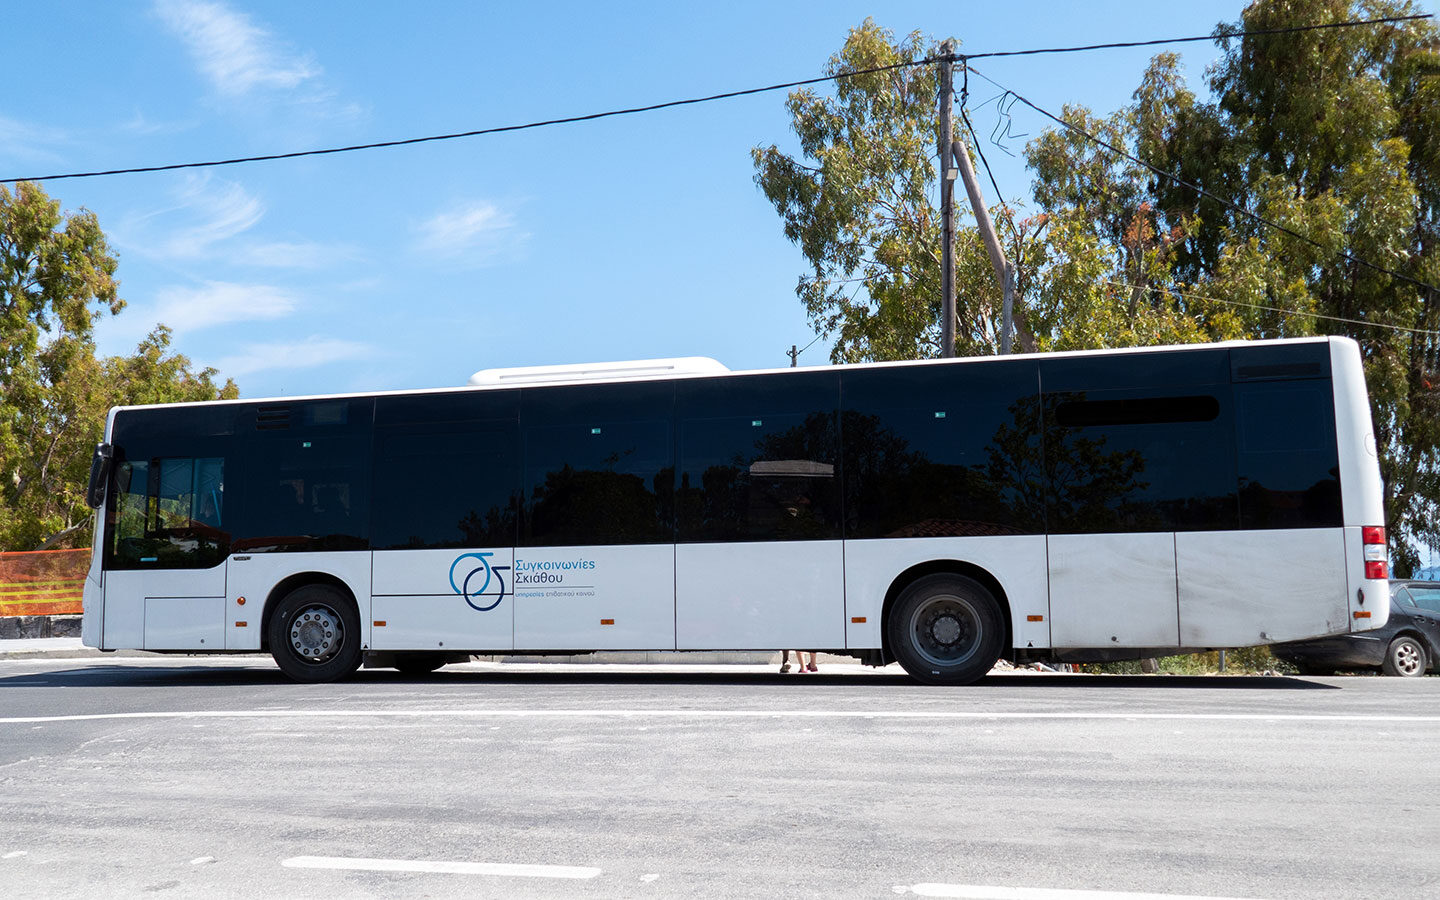 Skiathos Transports bus for exploring Skiathos without a car